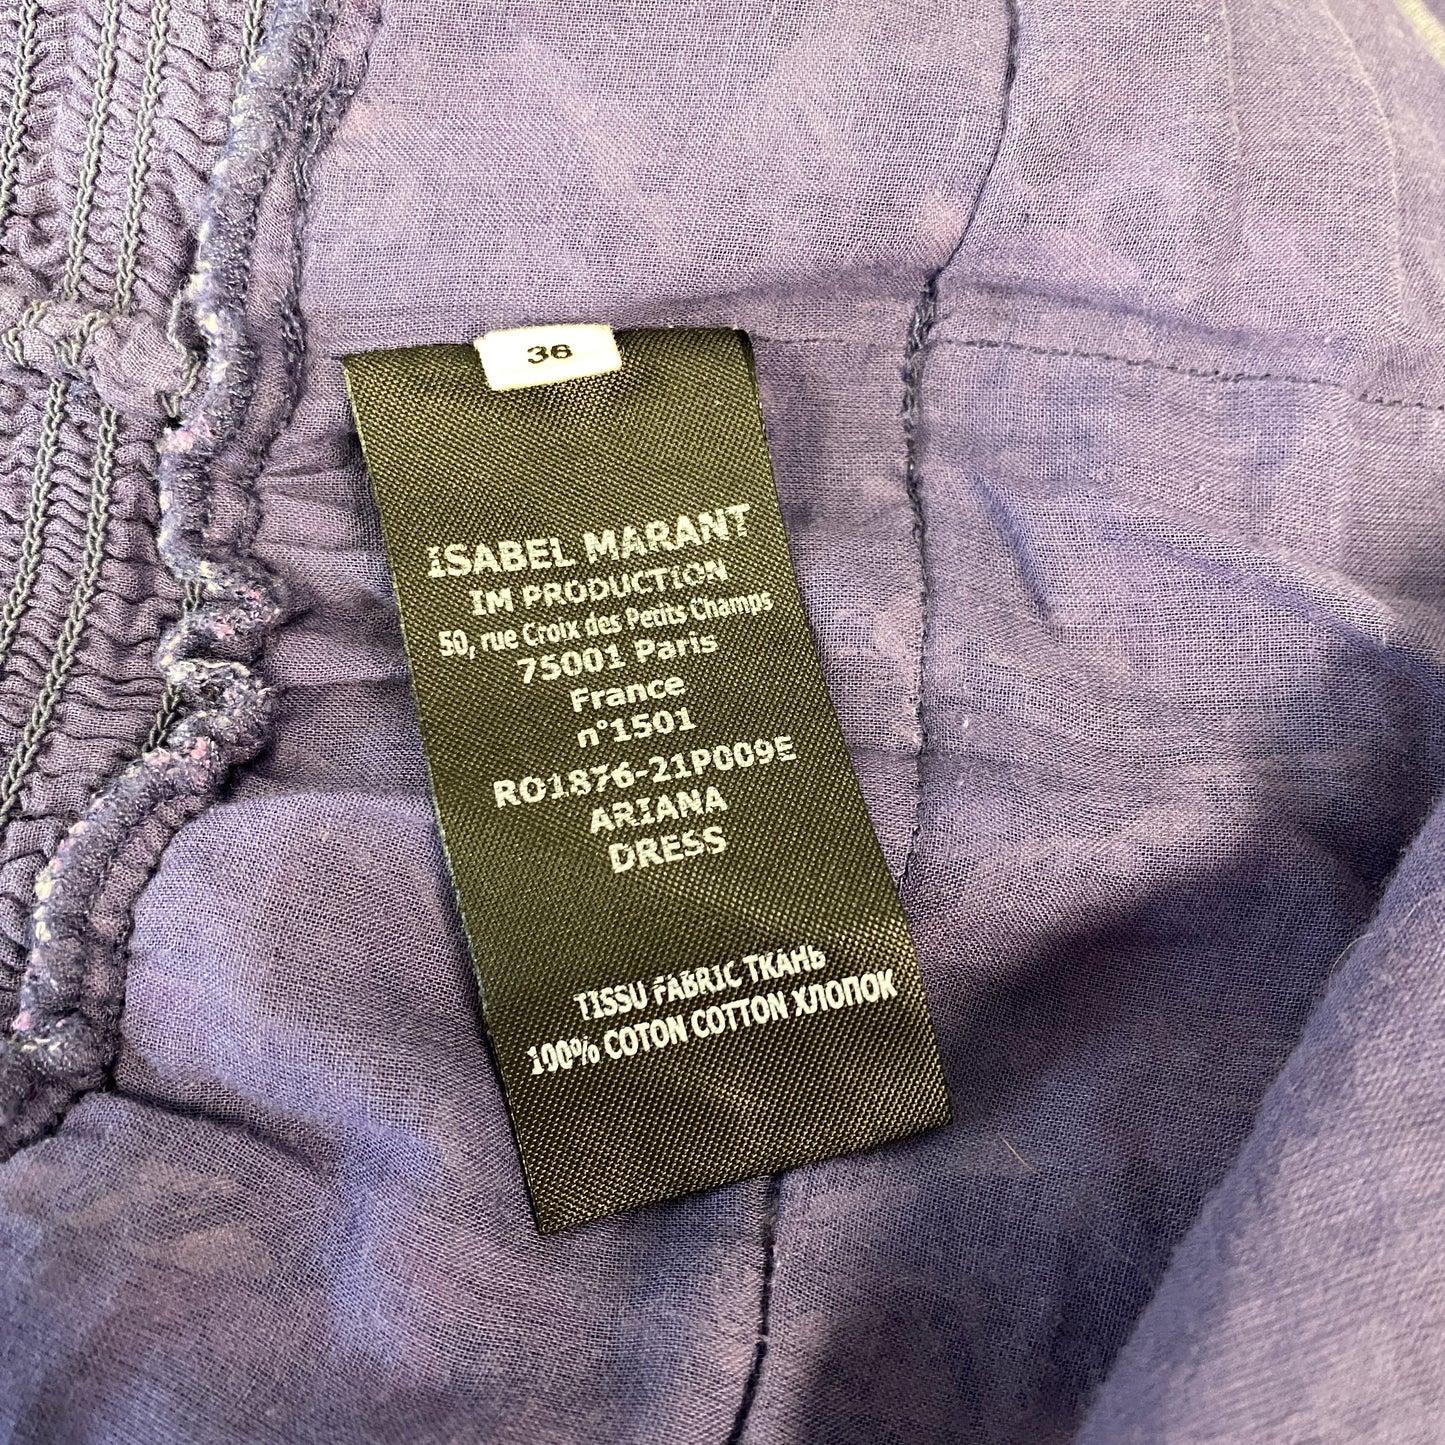 Isabel Marant Etoile frill tiered skirt size 36